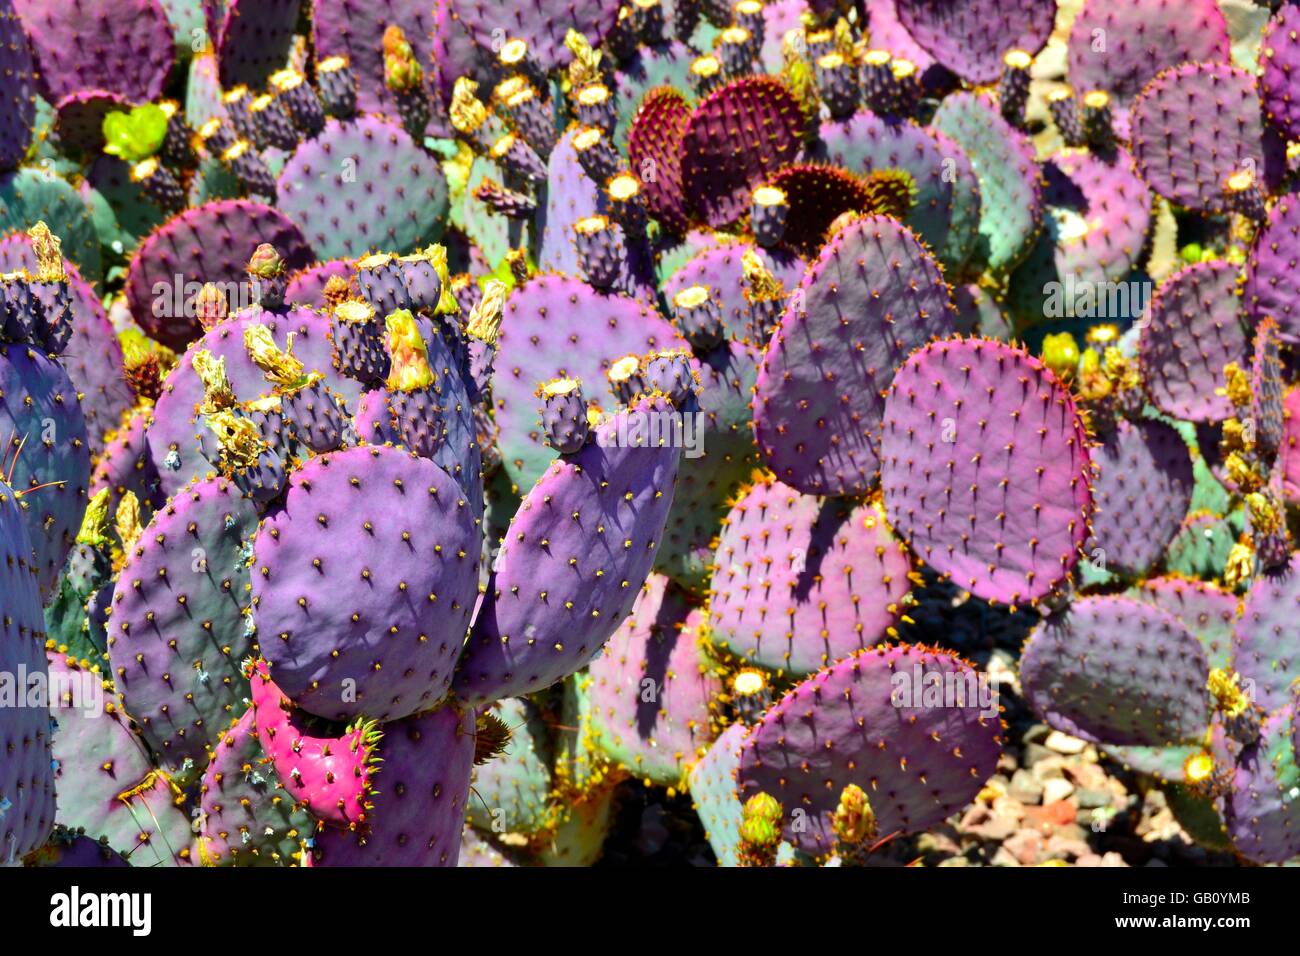 Cluster of Purple-Violet Cactuses in Arizona Stock Photo